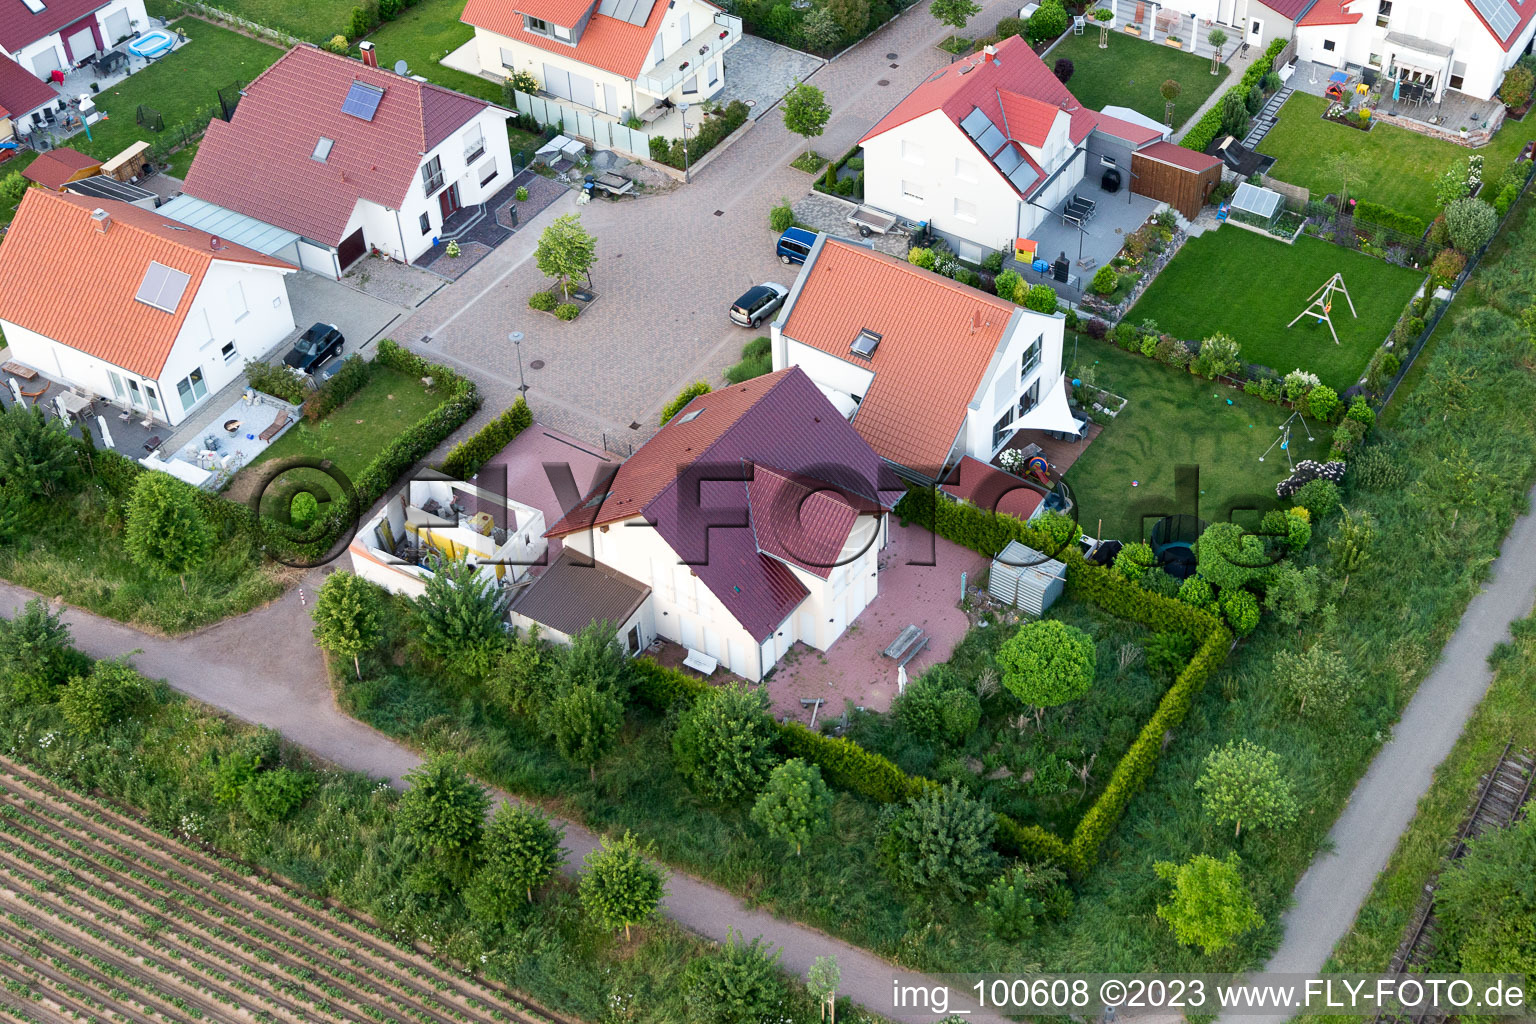 District Mörlheim in Landau in der Pfalz in the state Rhineland-Palatinate, Germany from a drone